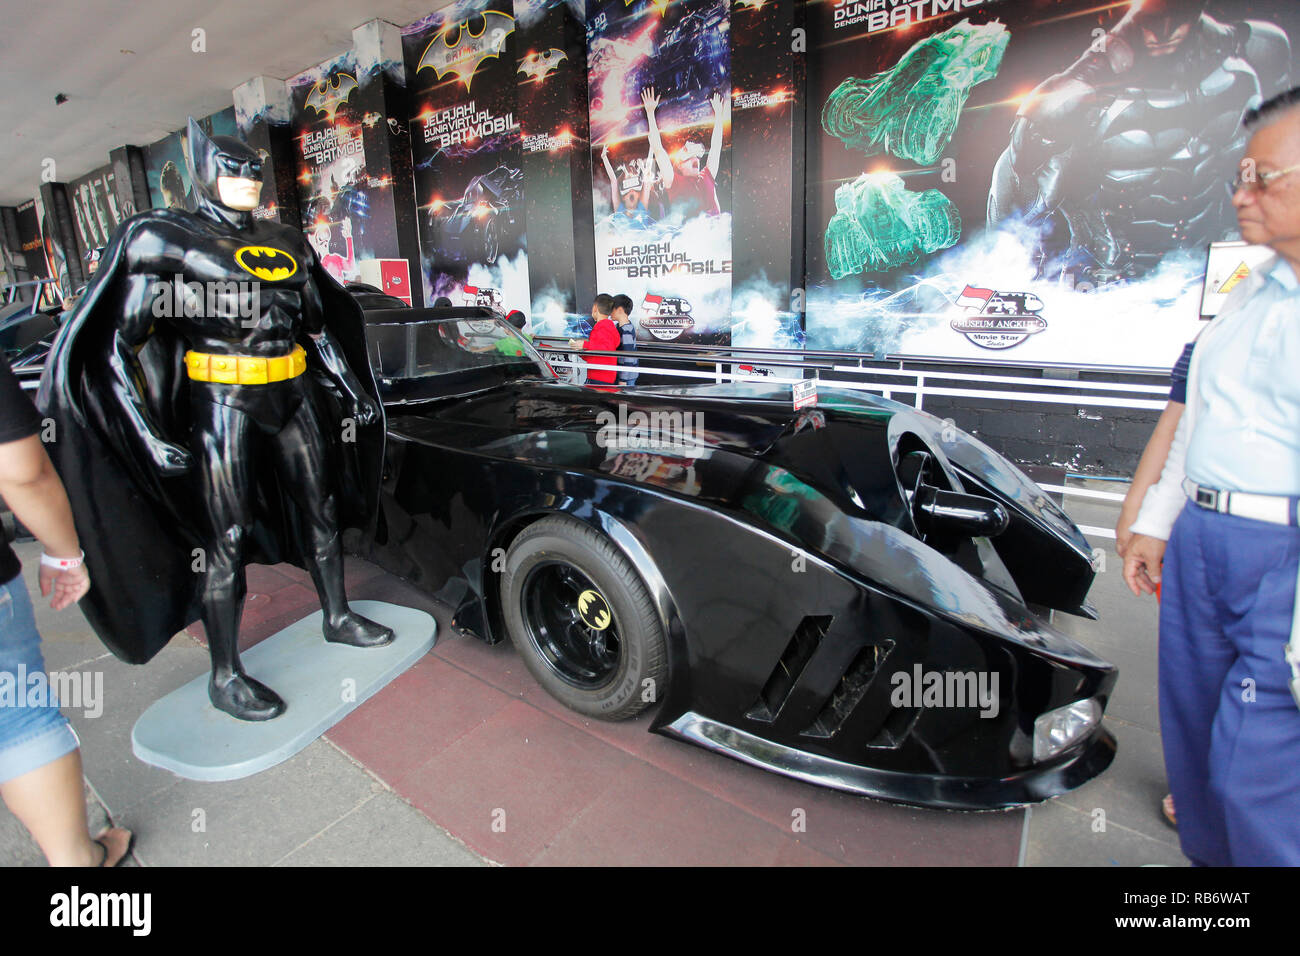 Batman car -Fotos und -Bildmaterial in hoher Auflösung – Alamy